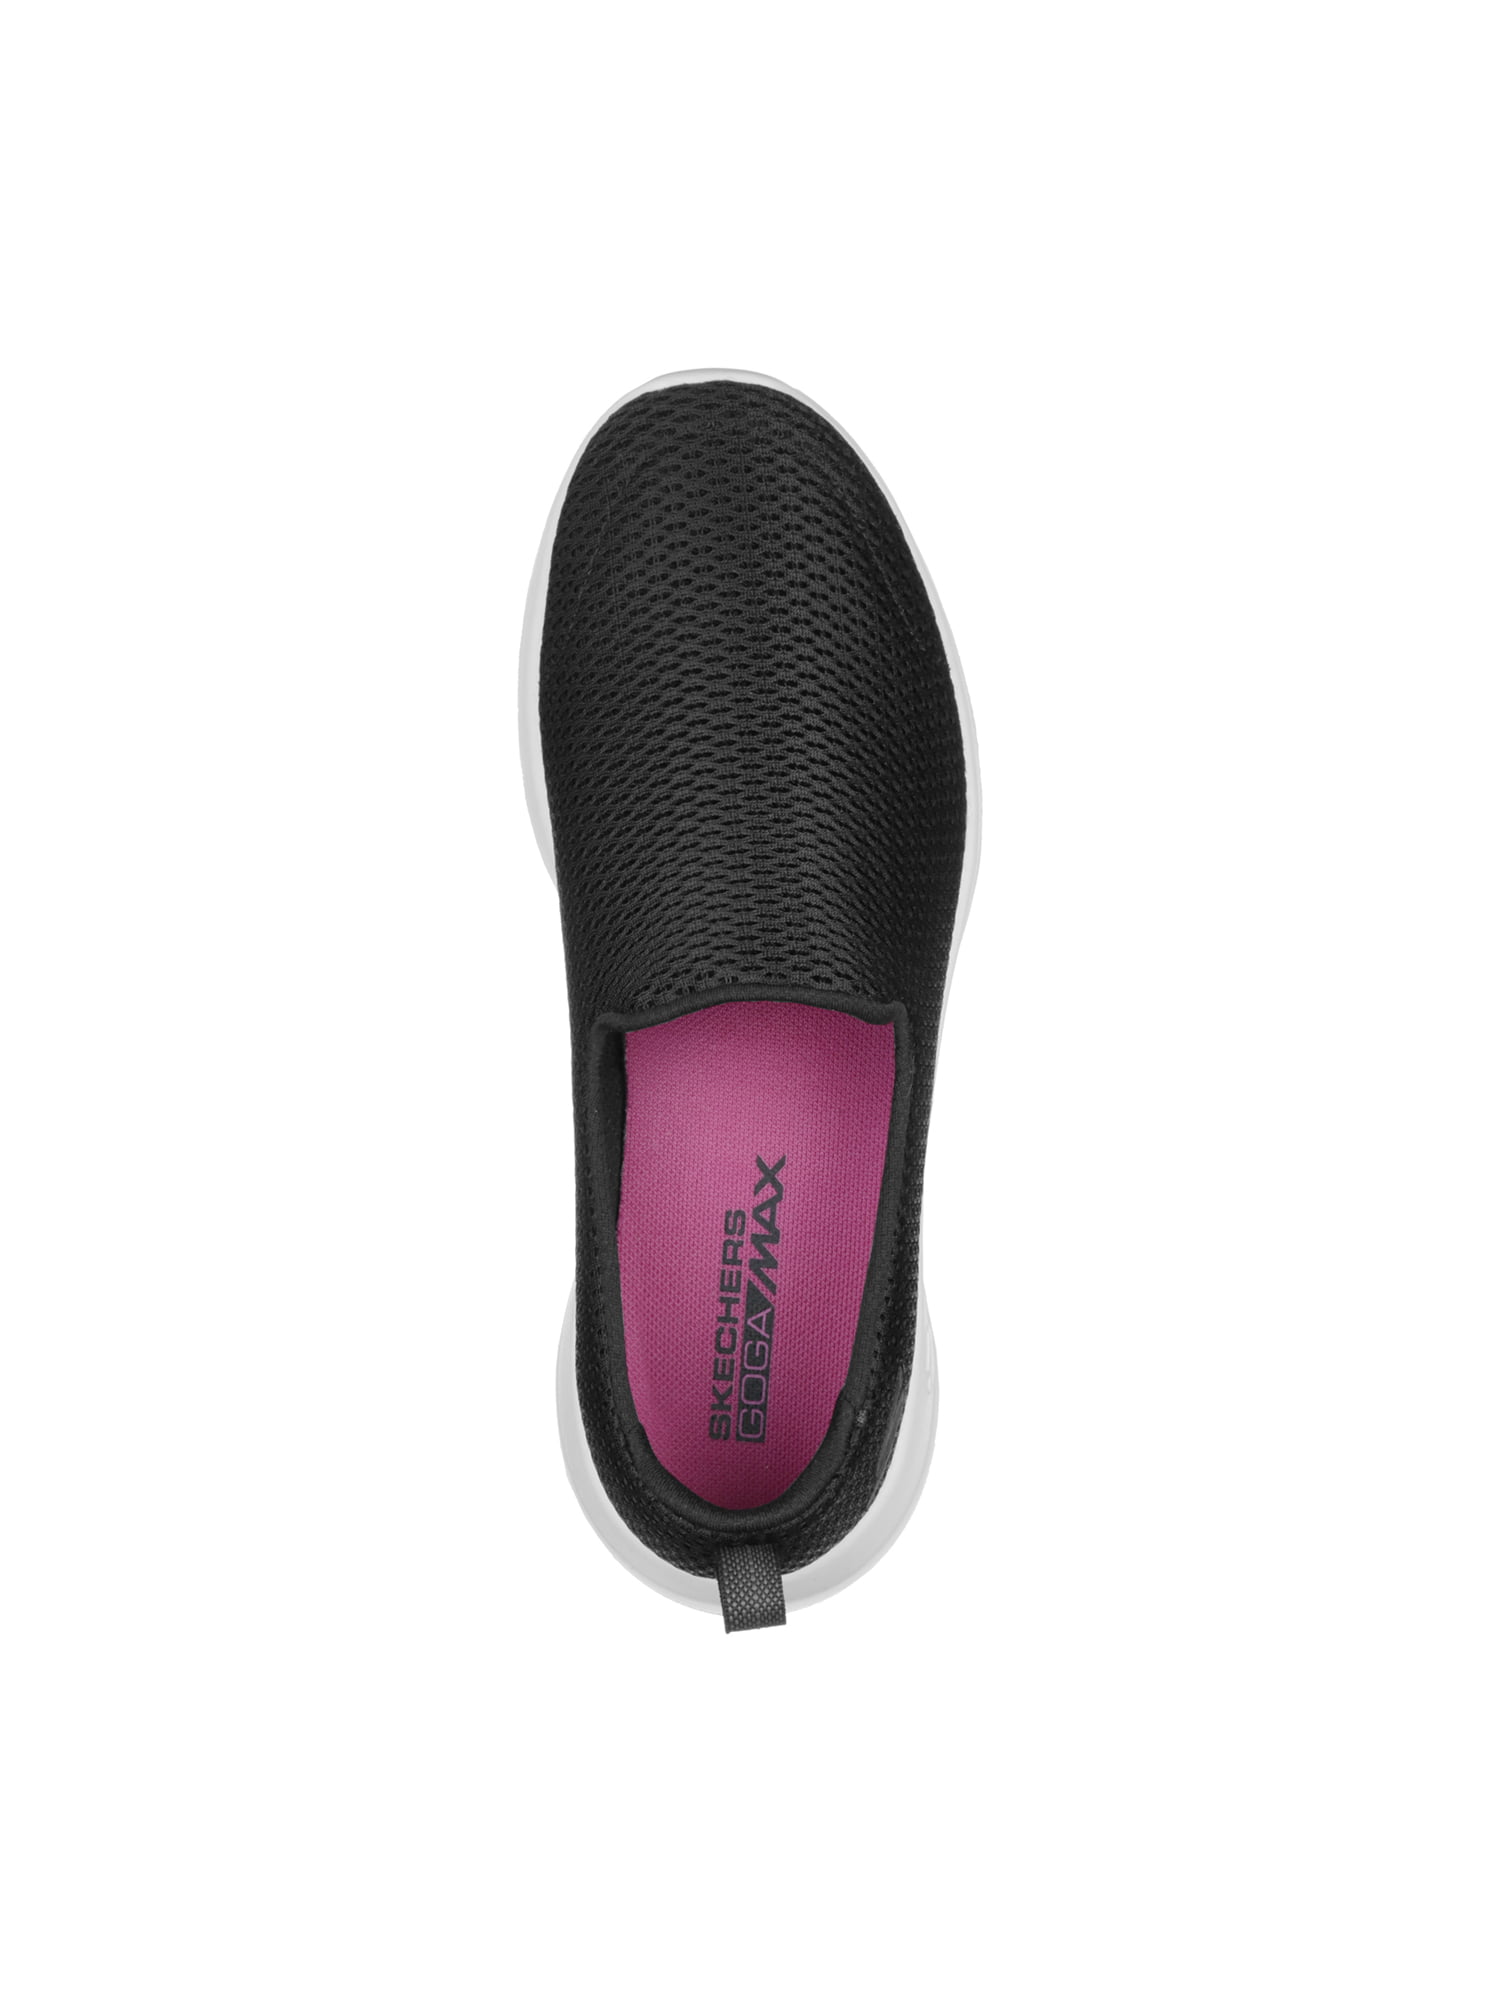 Skechers Women's GOwalk Joy Slip-on Comfort Shoe, Wide Width Available - Walmart.com